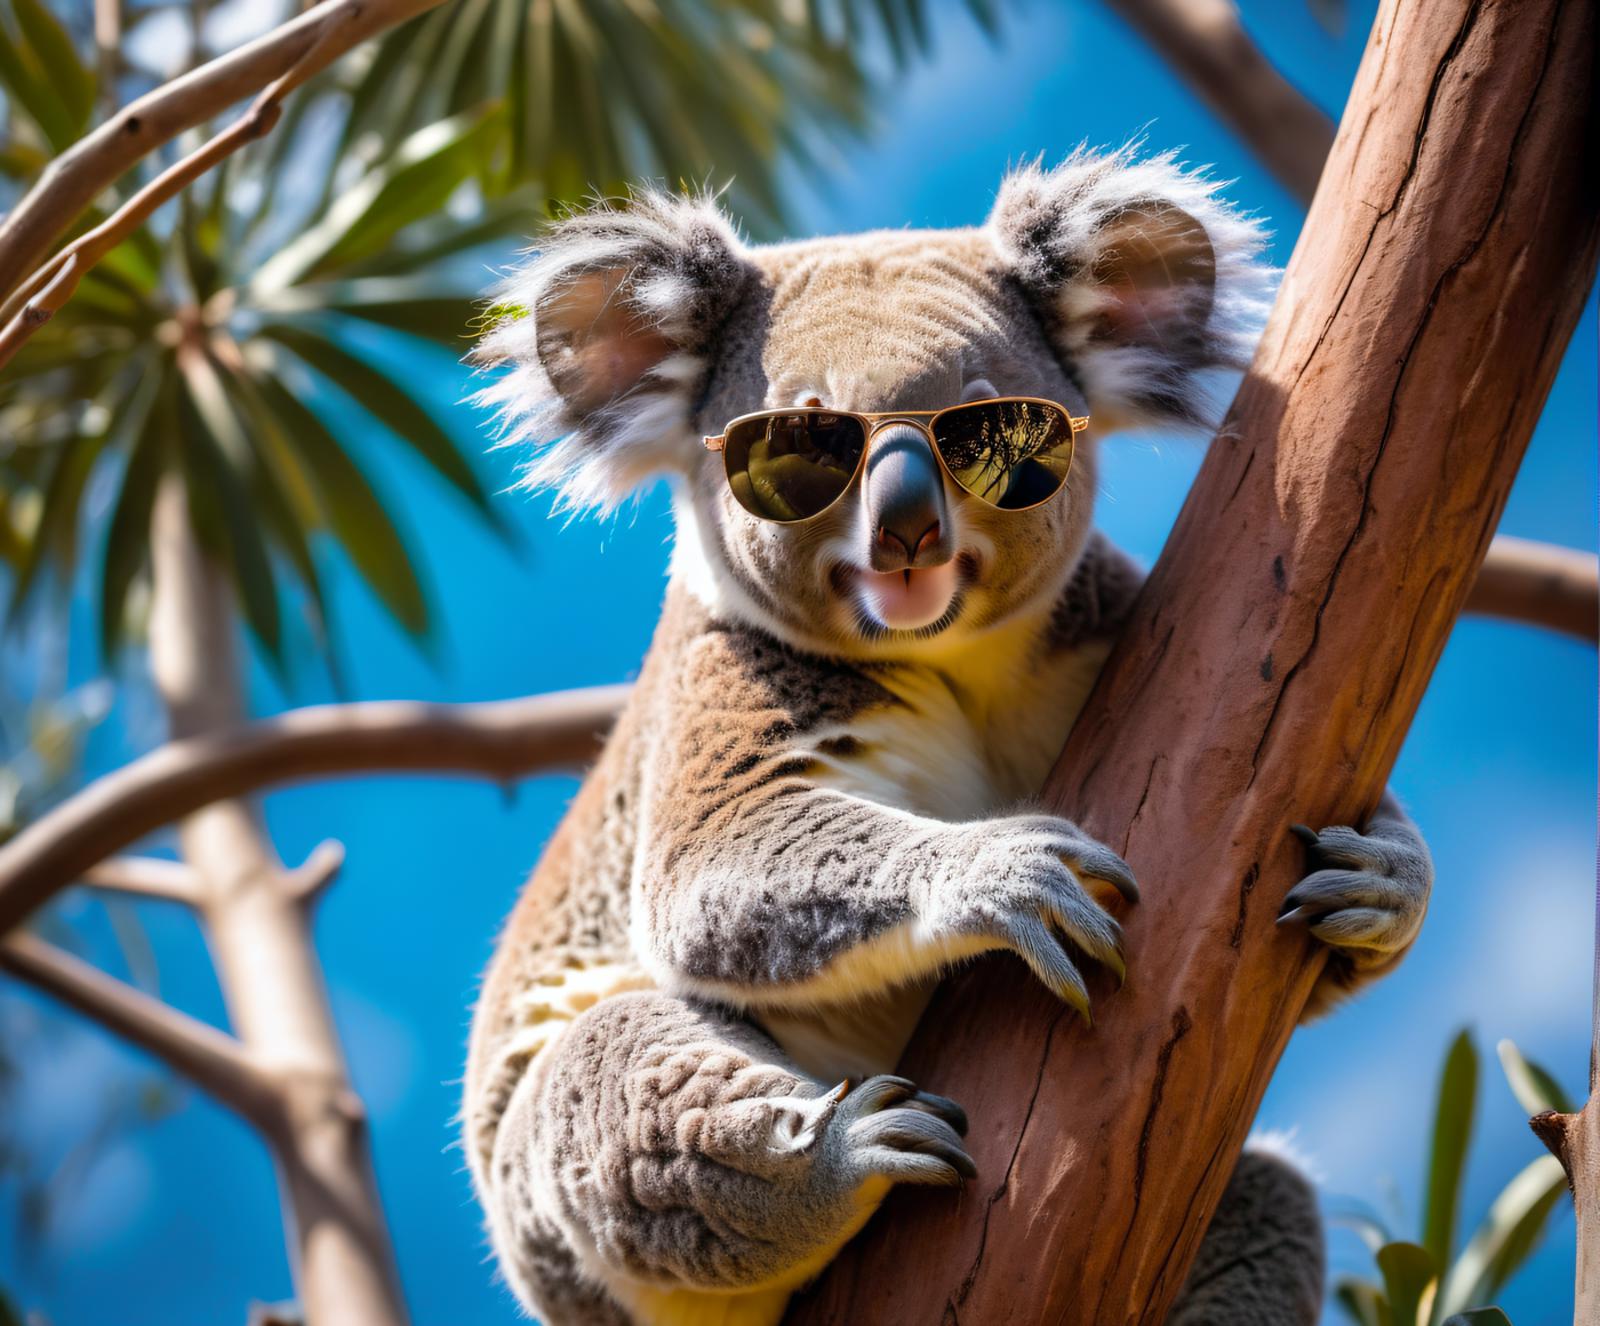 A koala bear with sunglasses hanging on a tree branch.